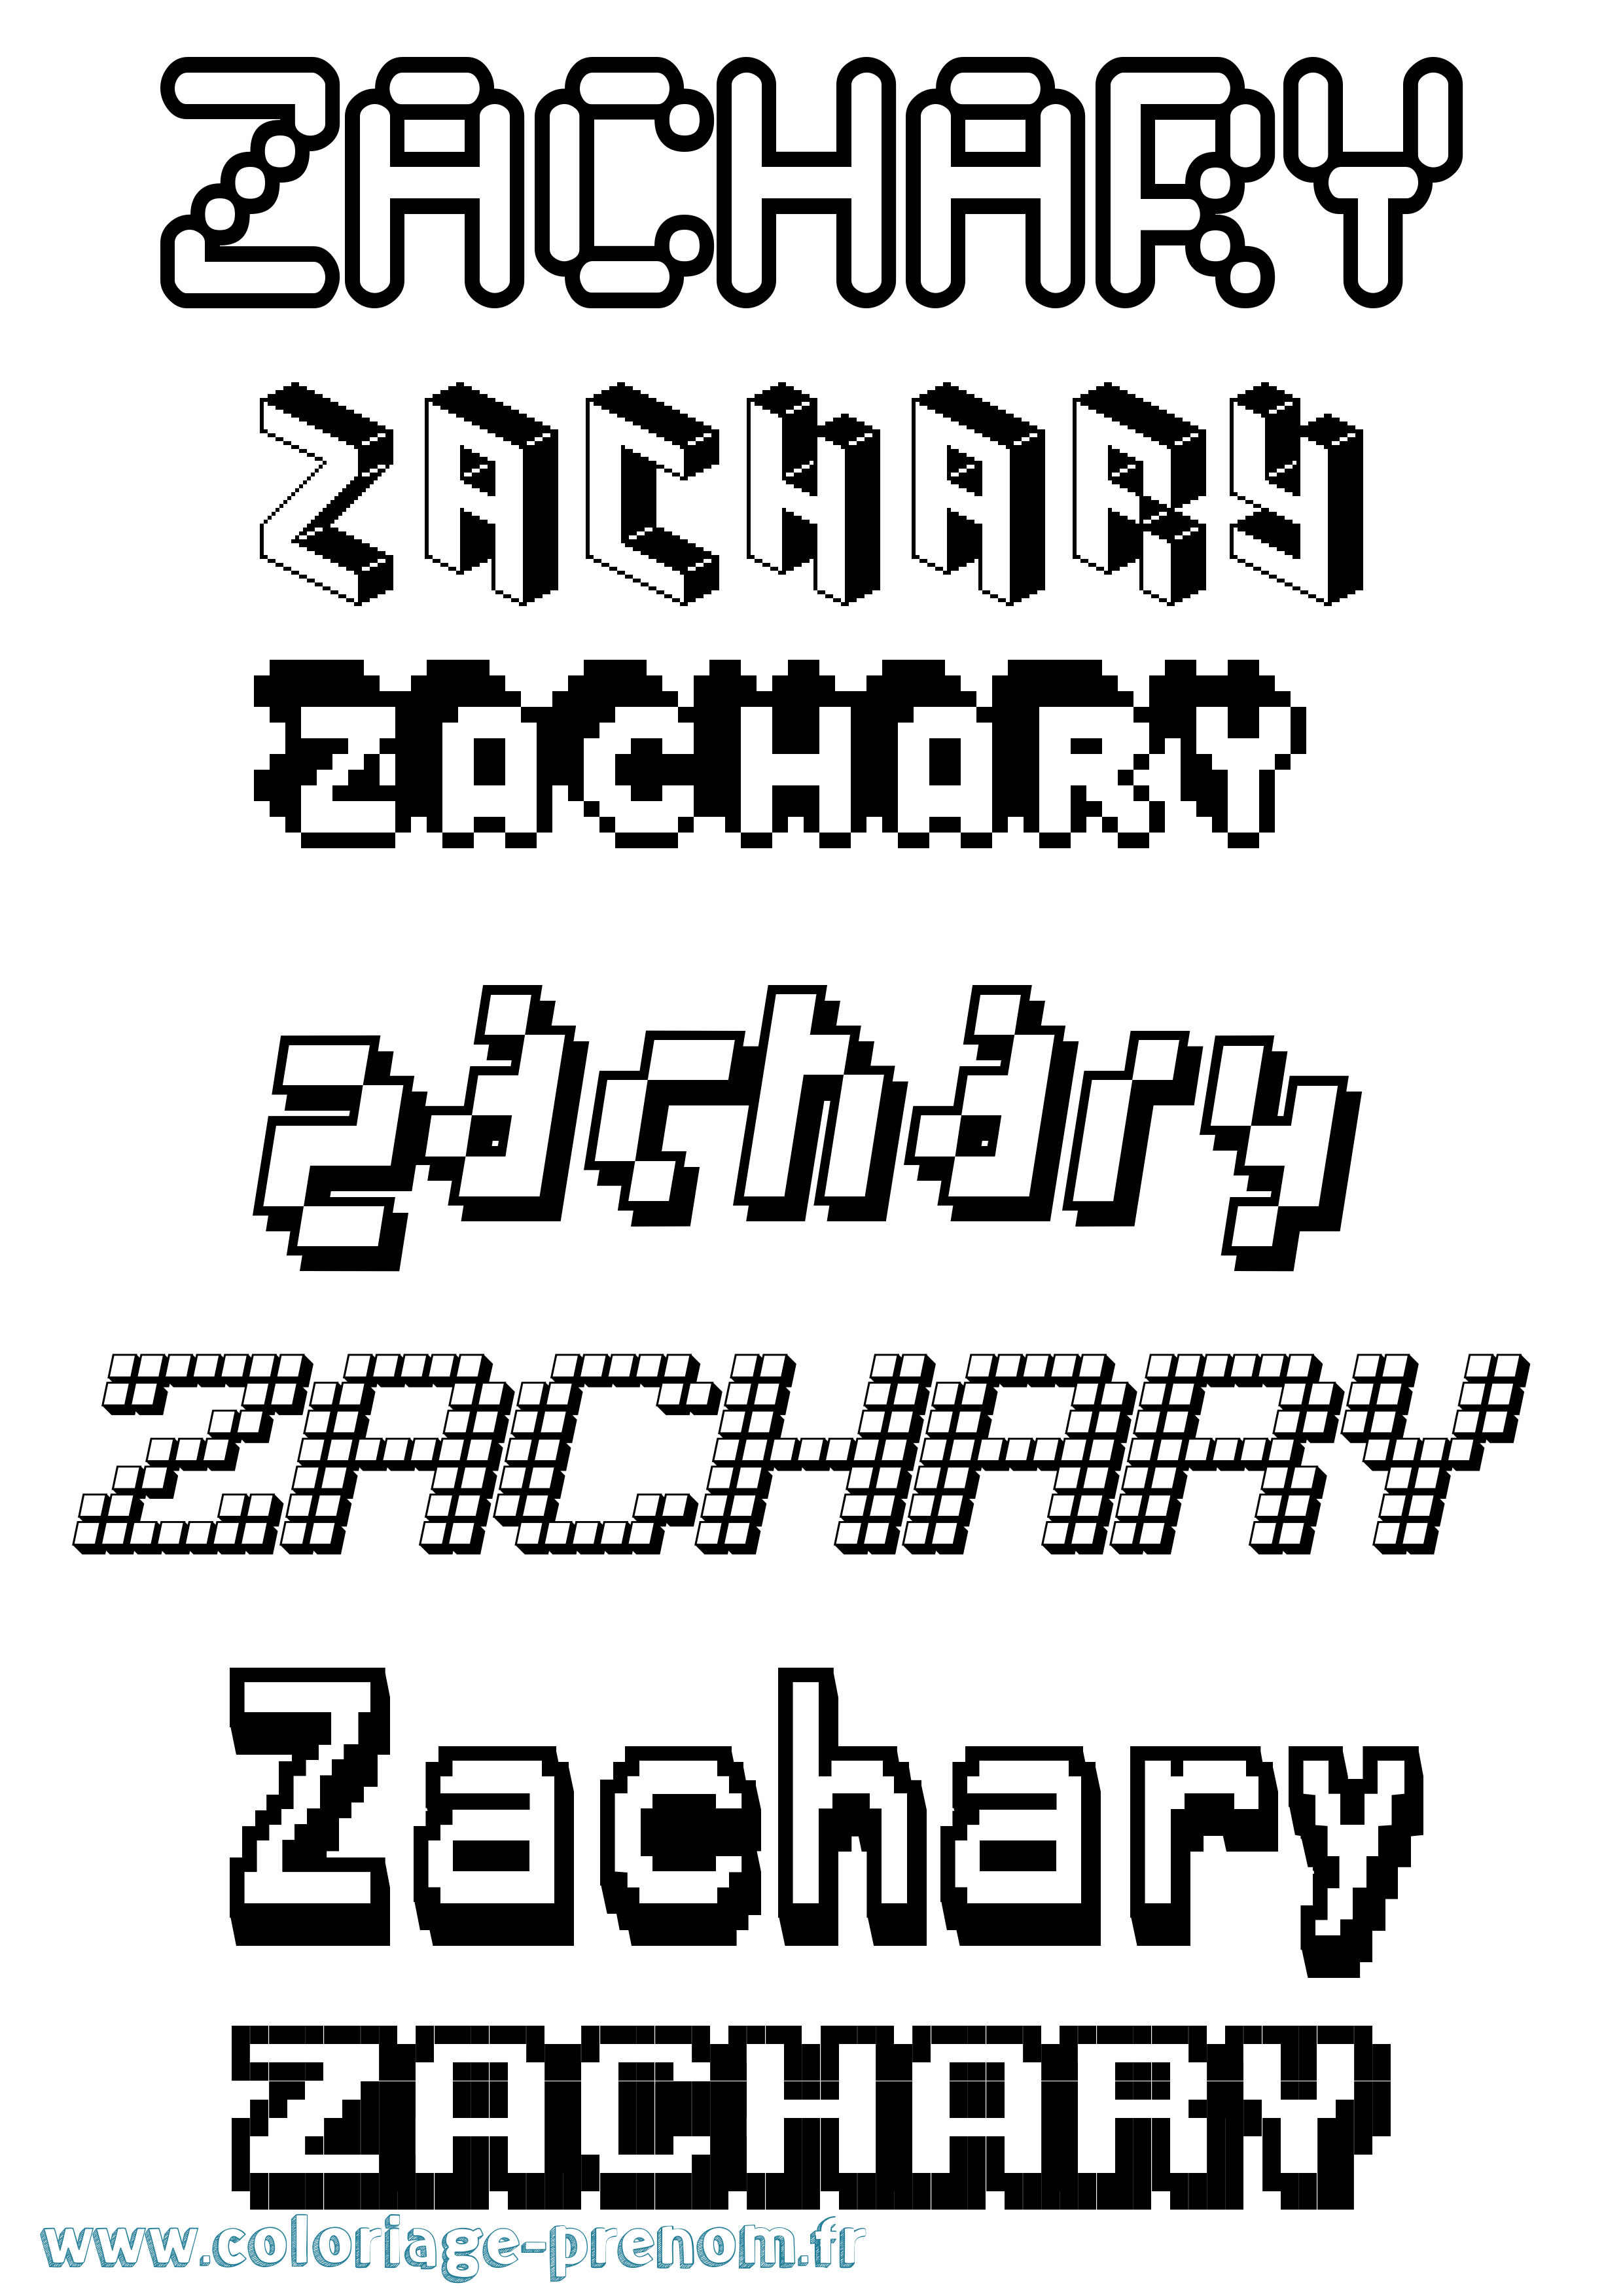 Coloriage prénom Zachary Pixel